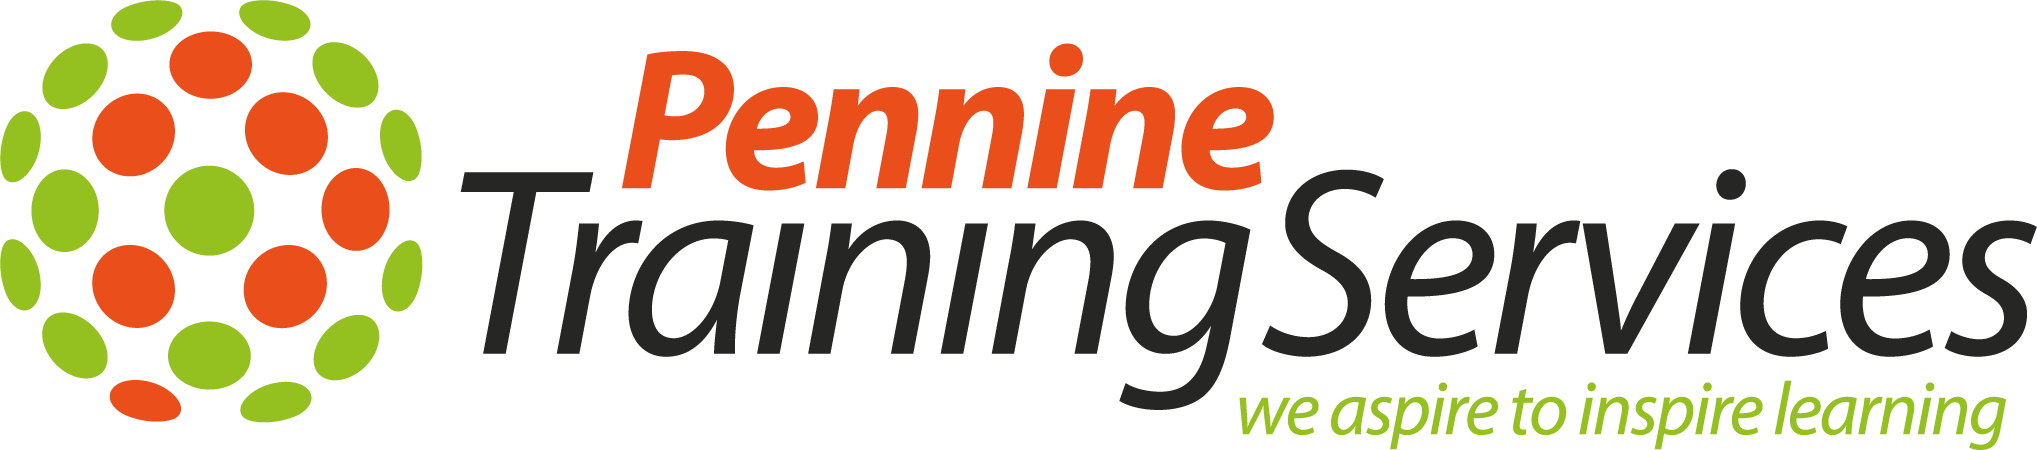 Pennine Training Services